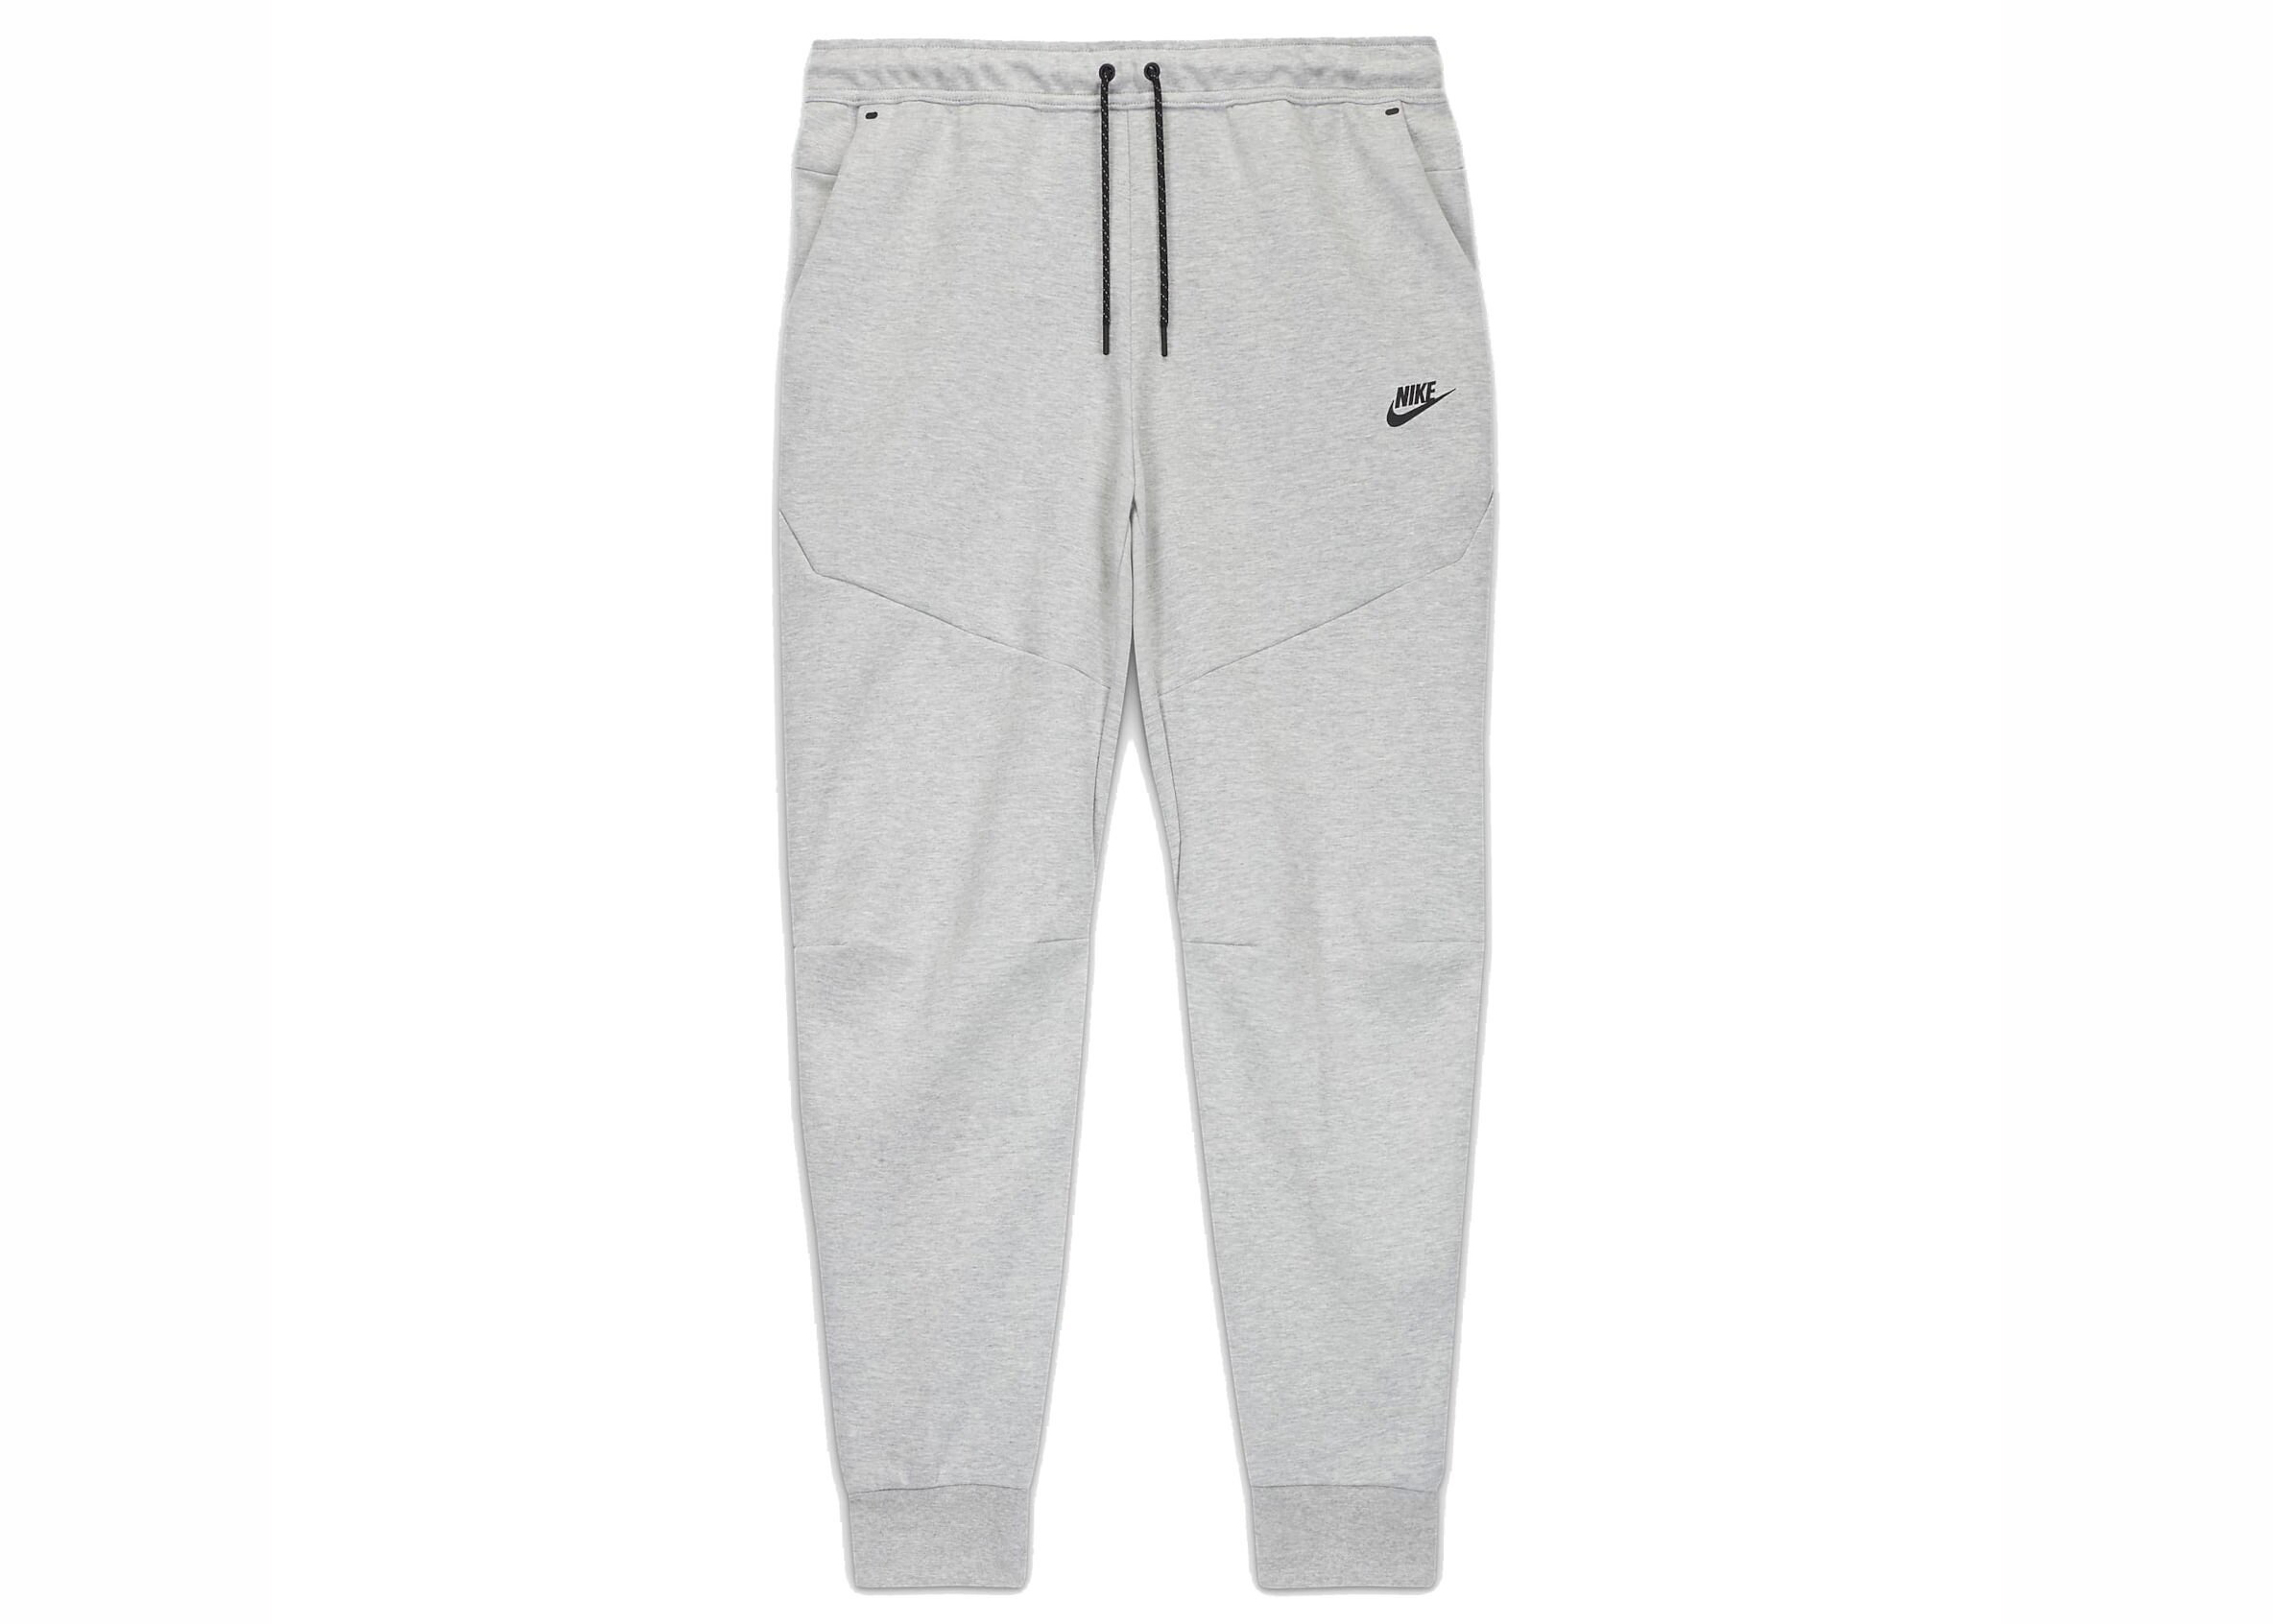 Nike Men's Club Fleece Sweatpants | Available at DICK'S